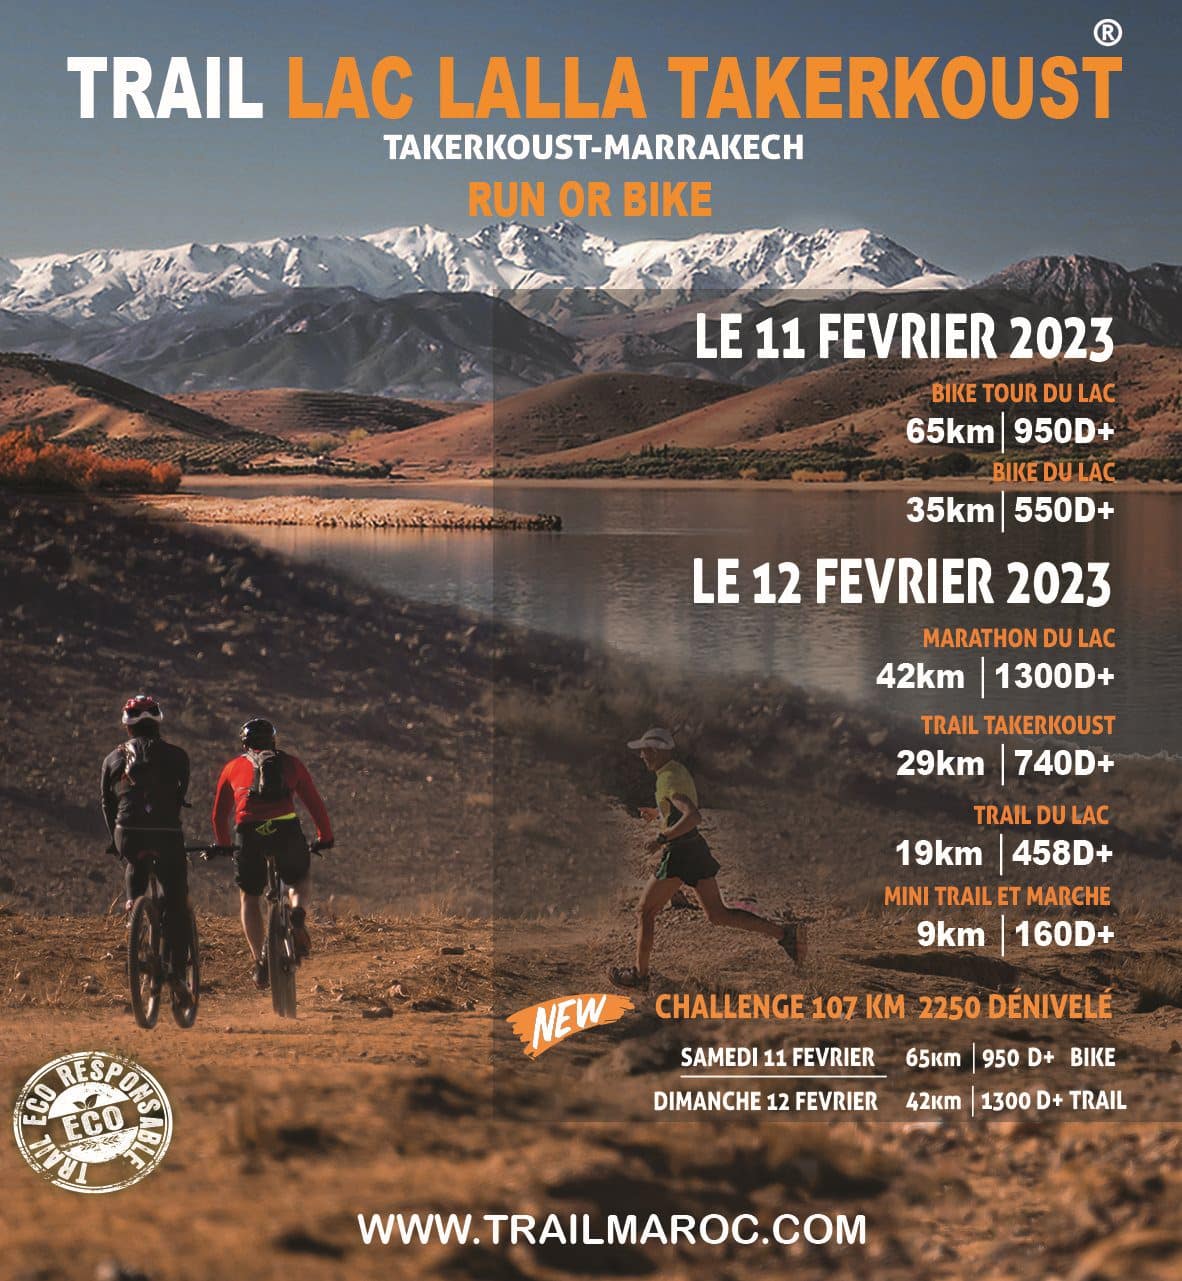 Trail or Bike Takerkoust